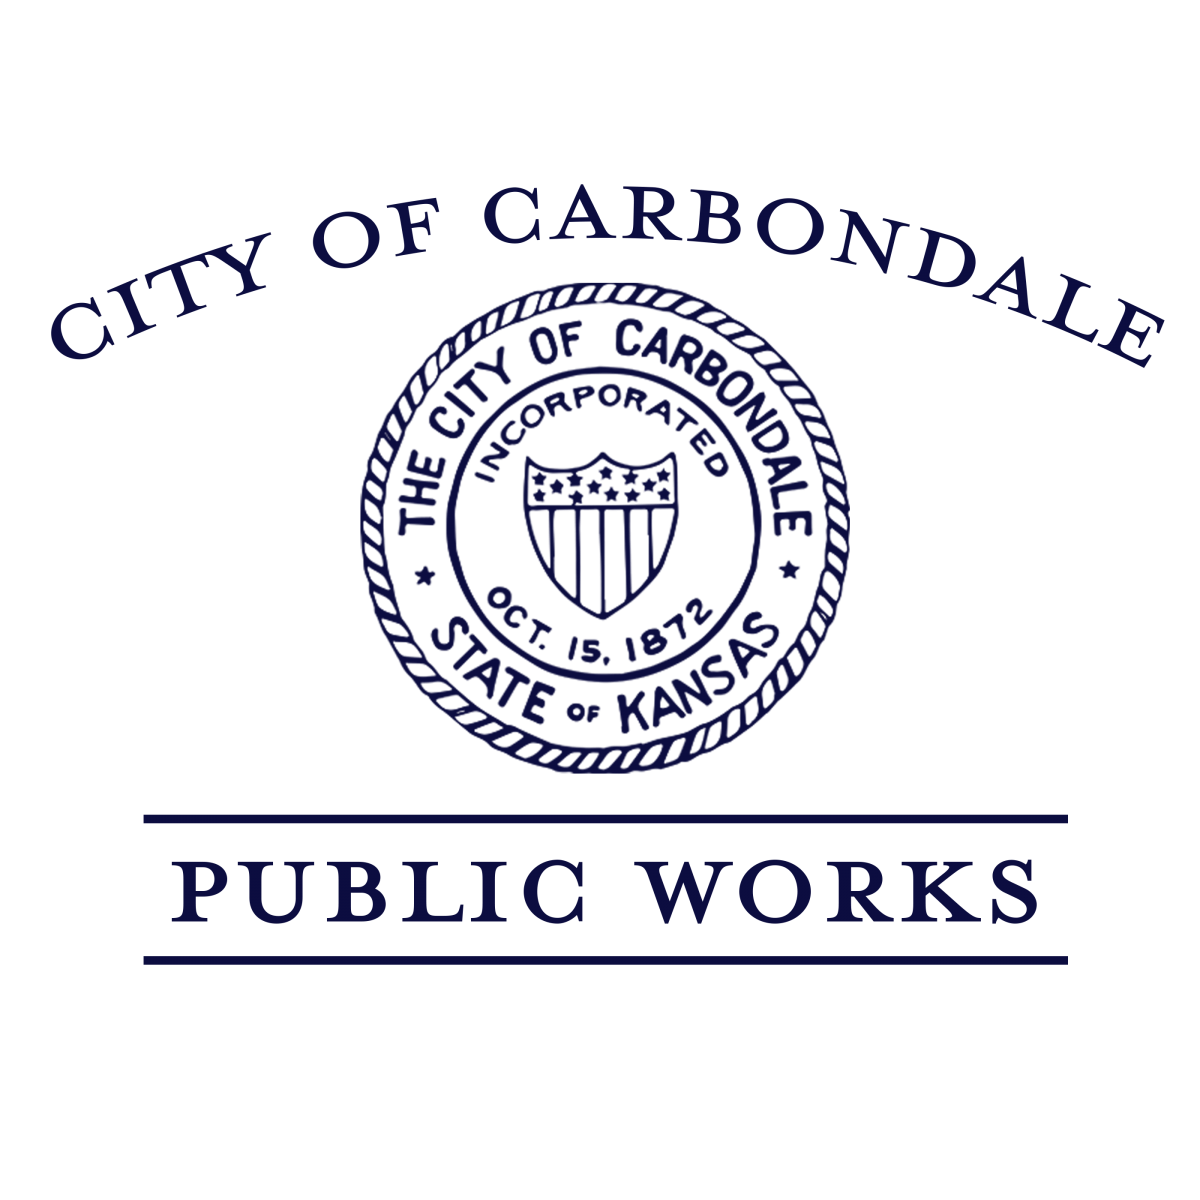 Public works logo